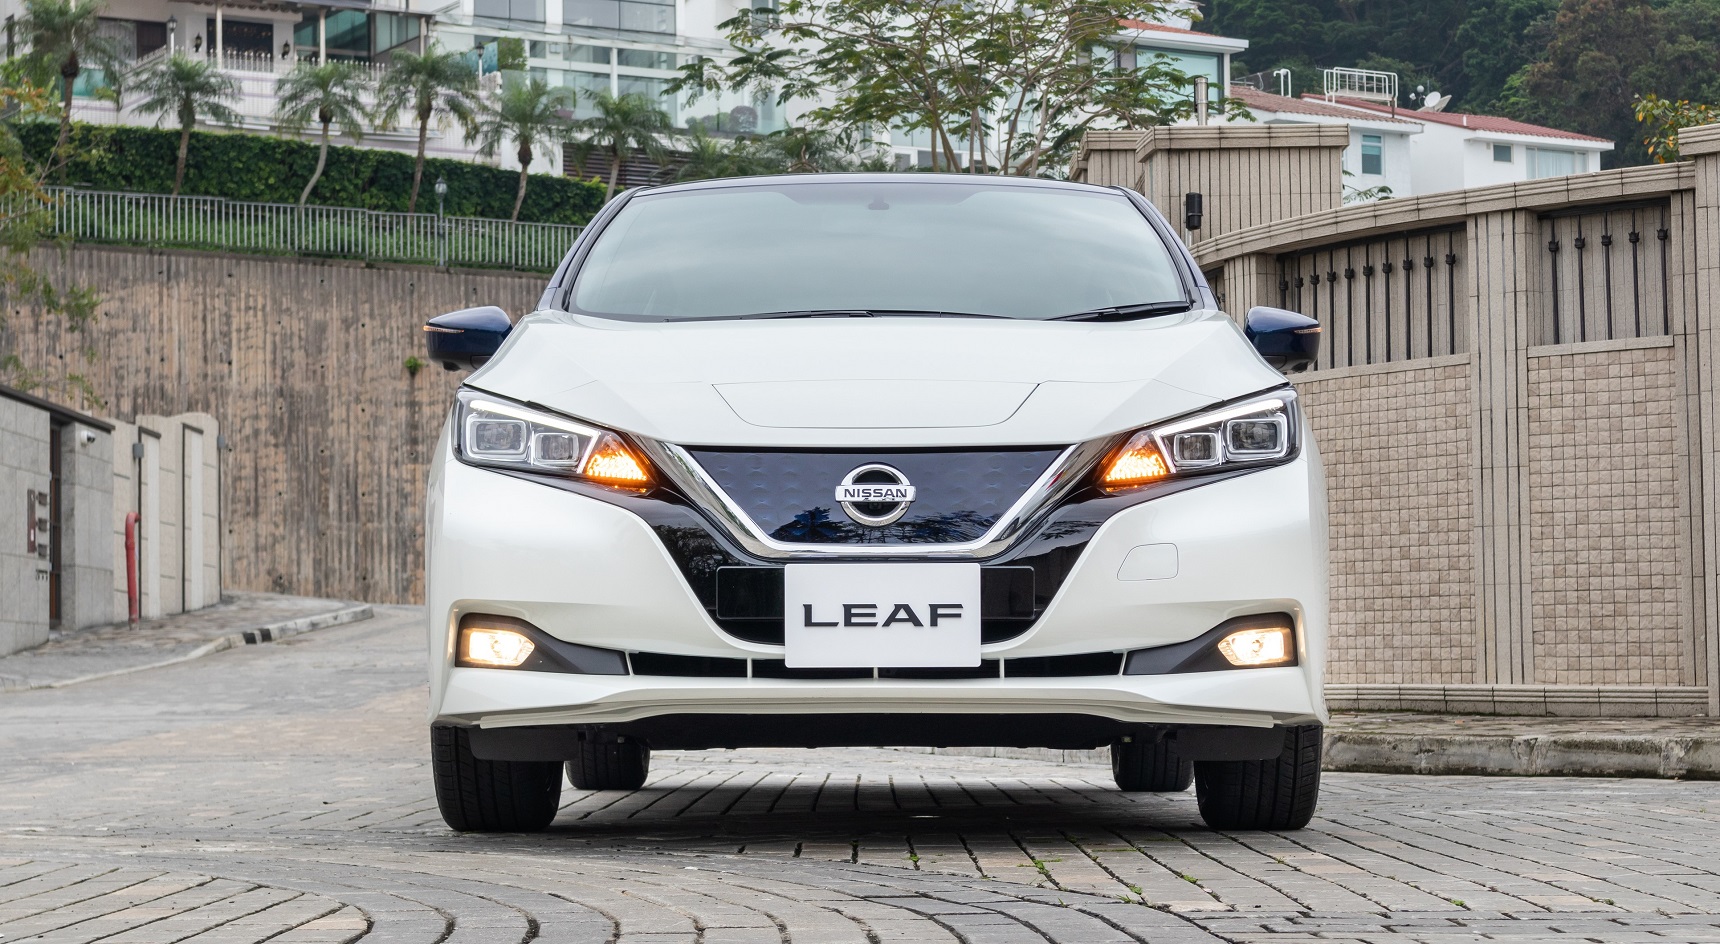 A 2019 Nissan Leaf. Image: iStock